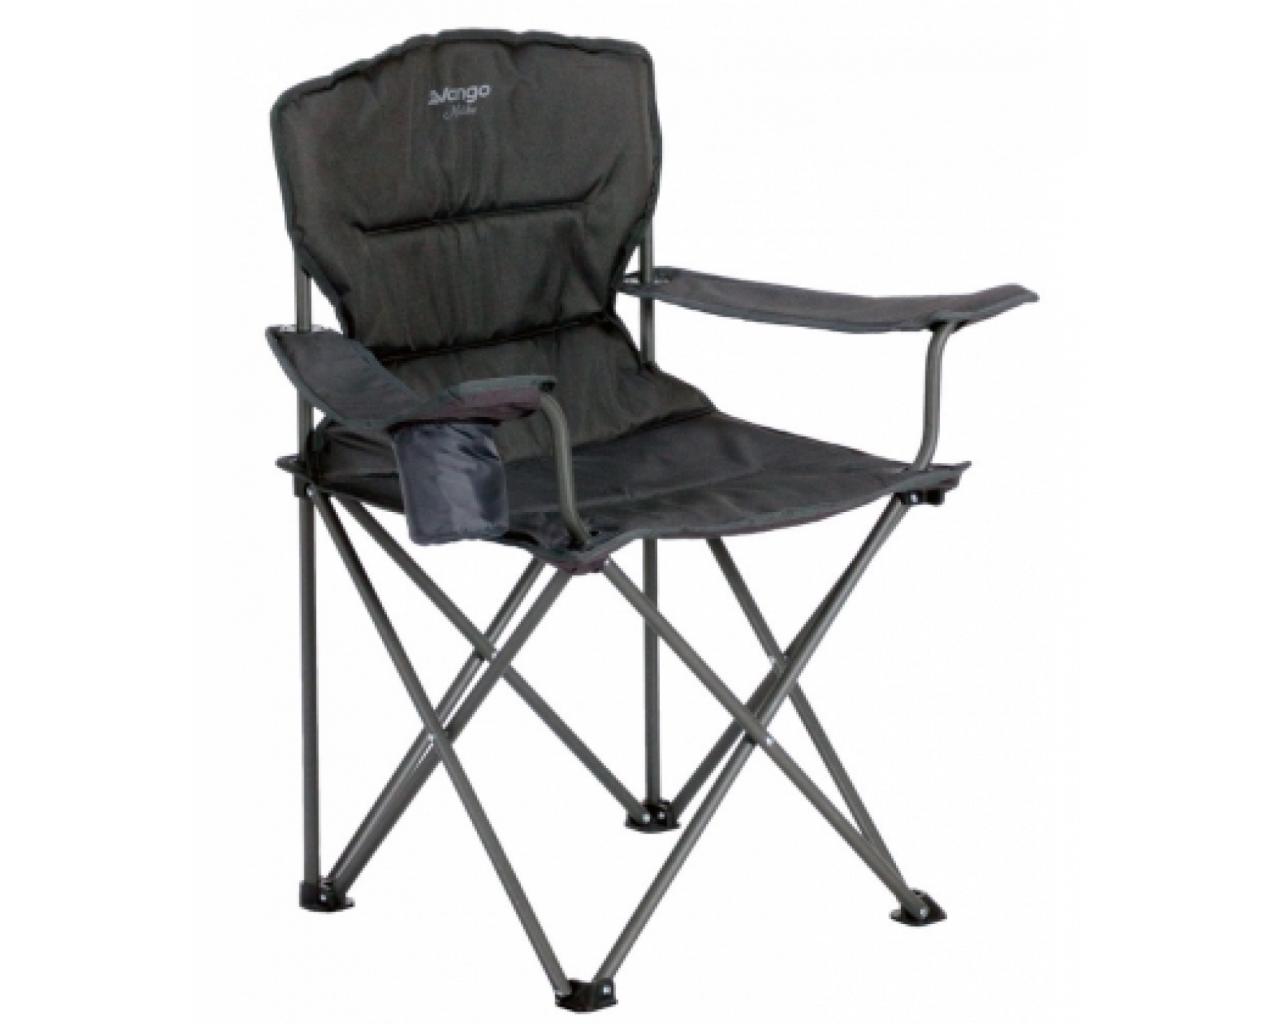 Red Vango Malibu Folding Camping Chair Brand New 